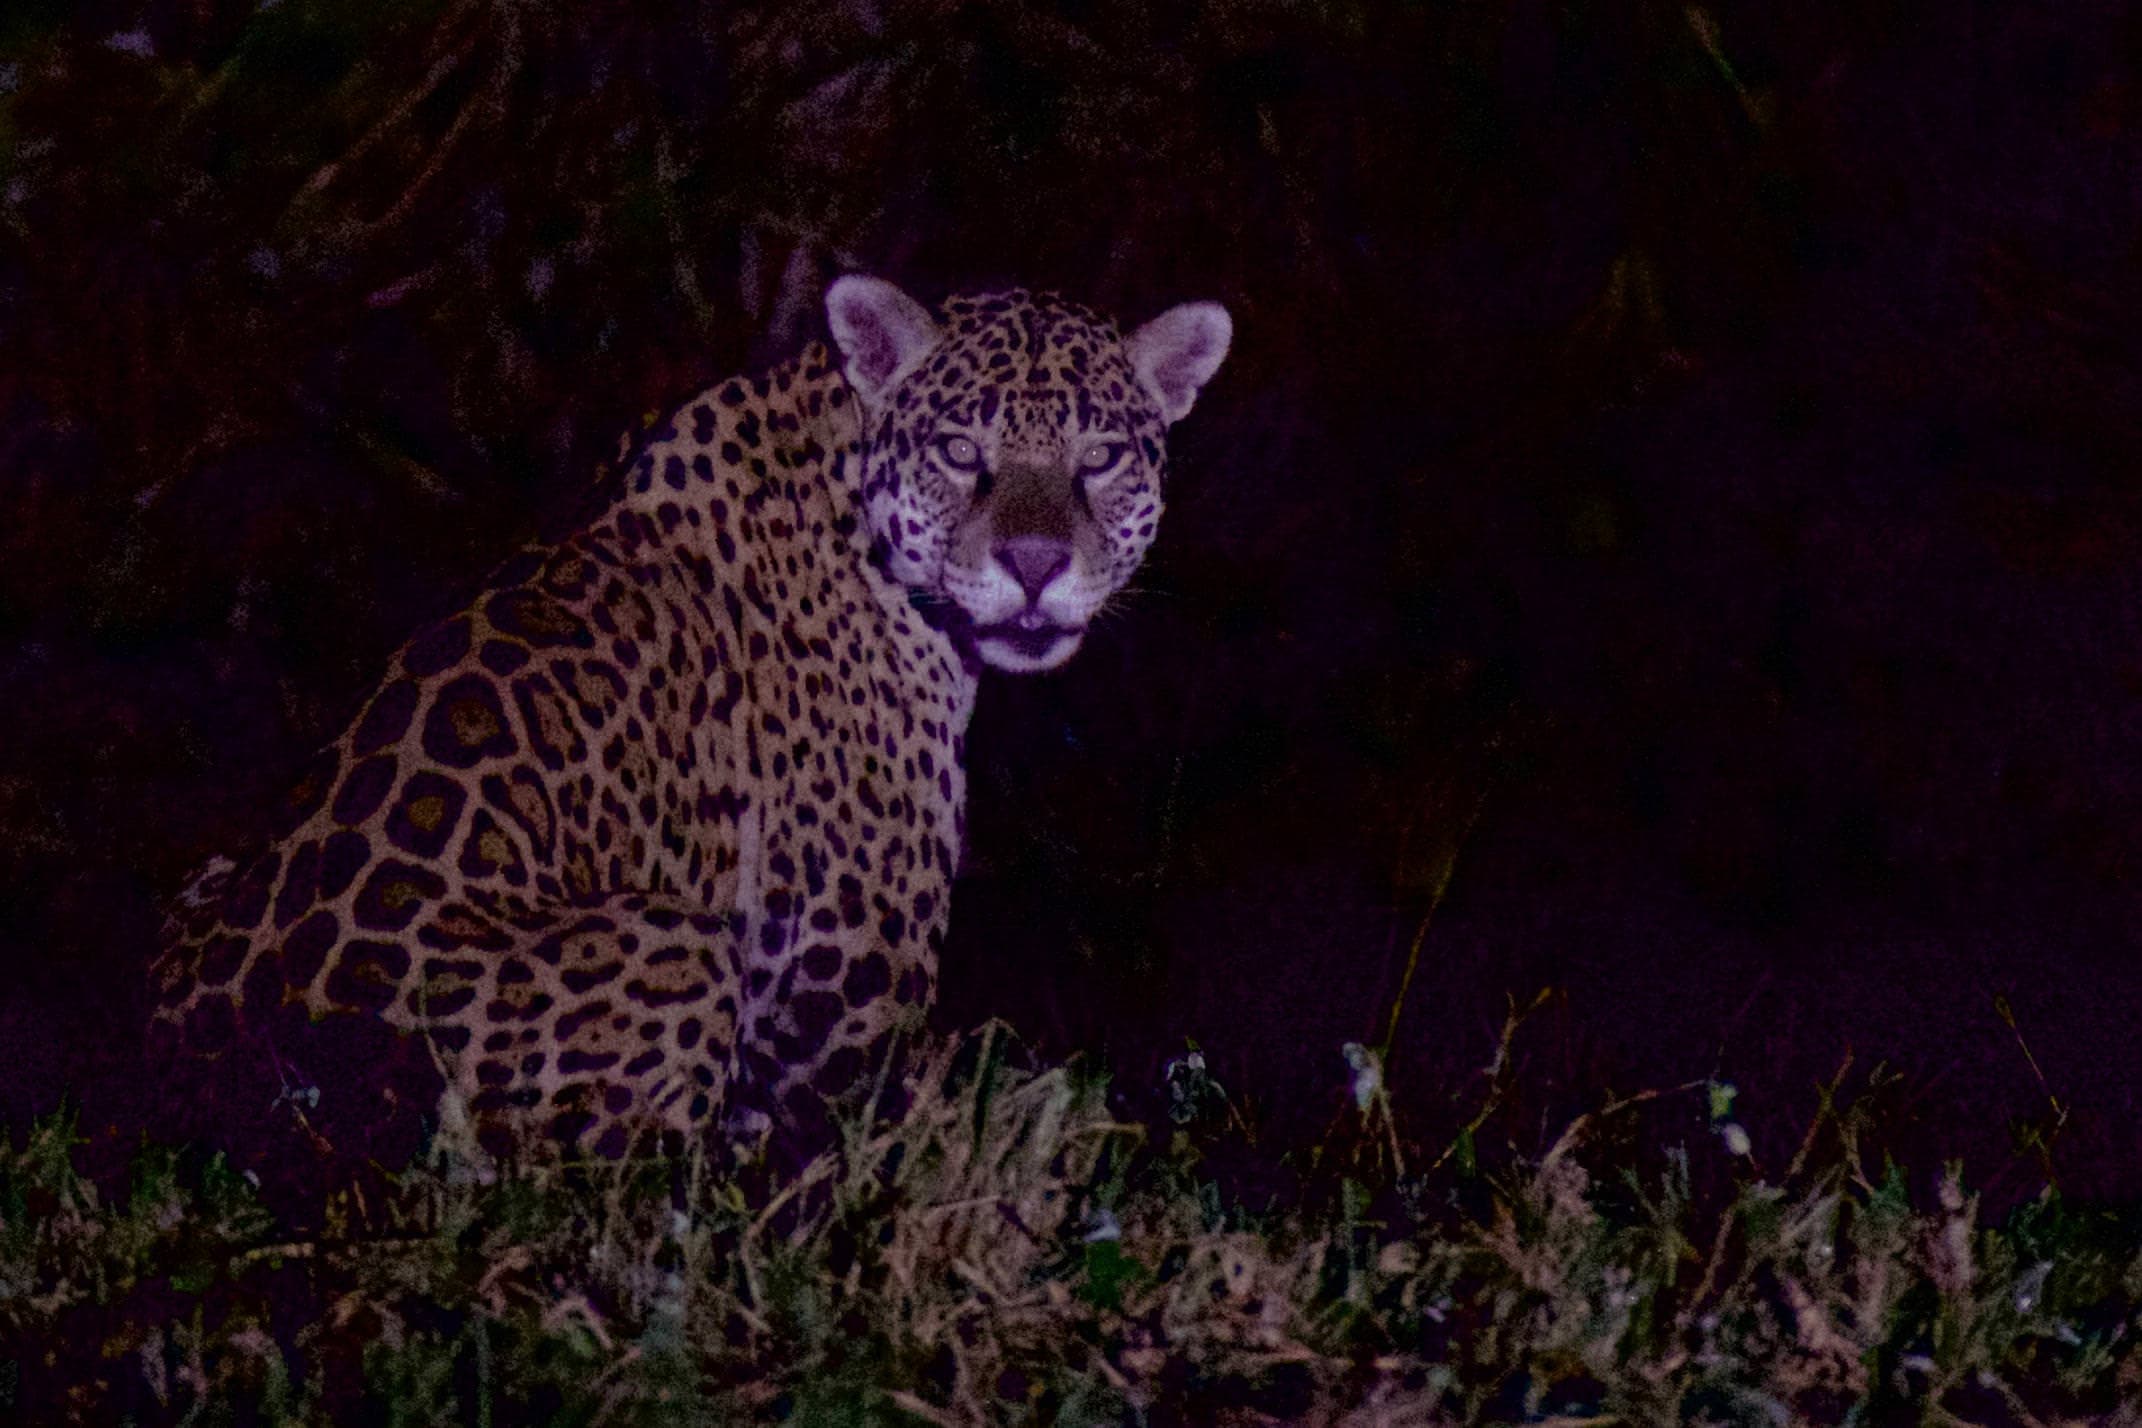 Brazil pantanal caiman lodge jaguar at night two copyright thomas power pura aventura